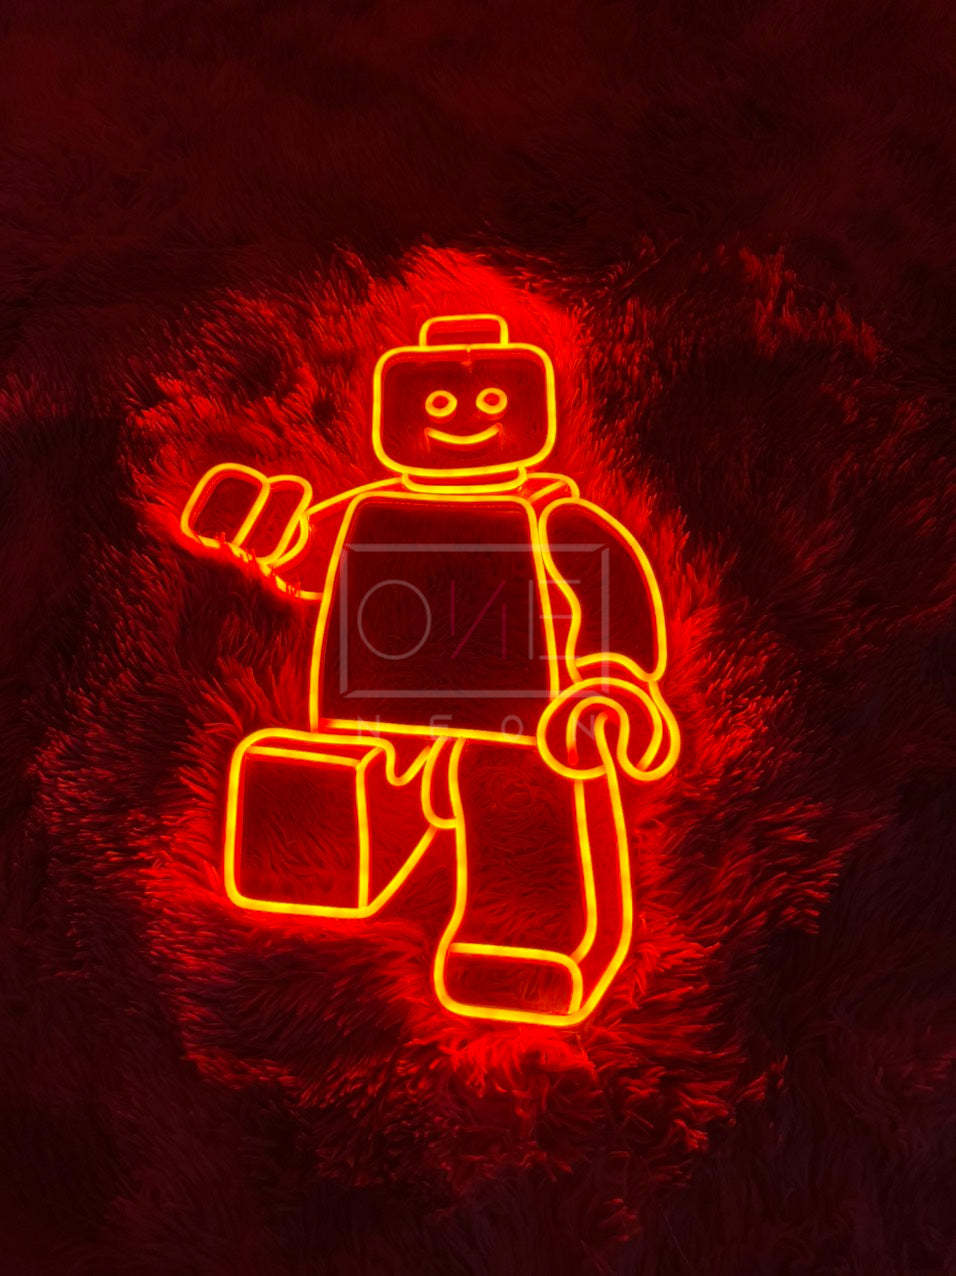 Lego | LED Neon Sign - $170.58